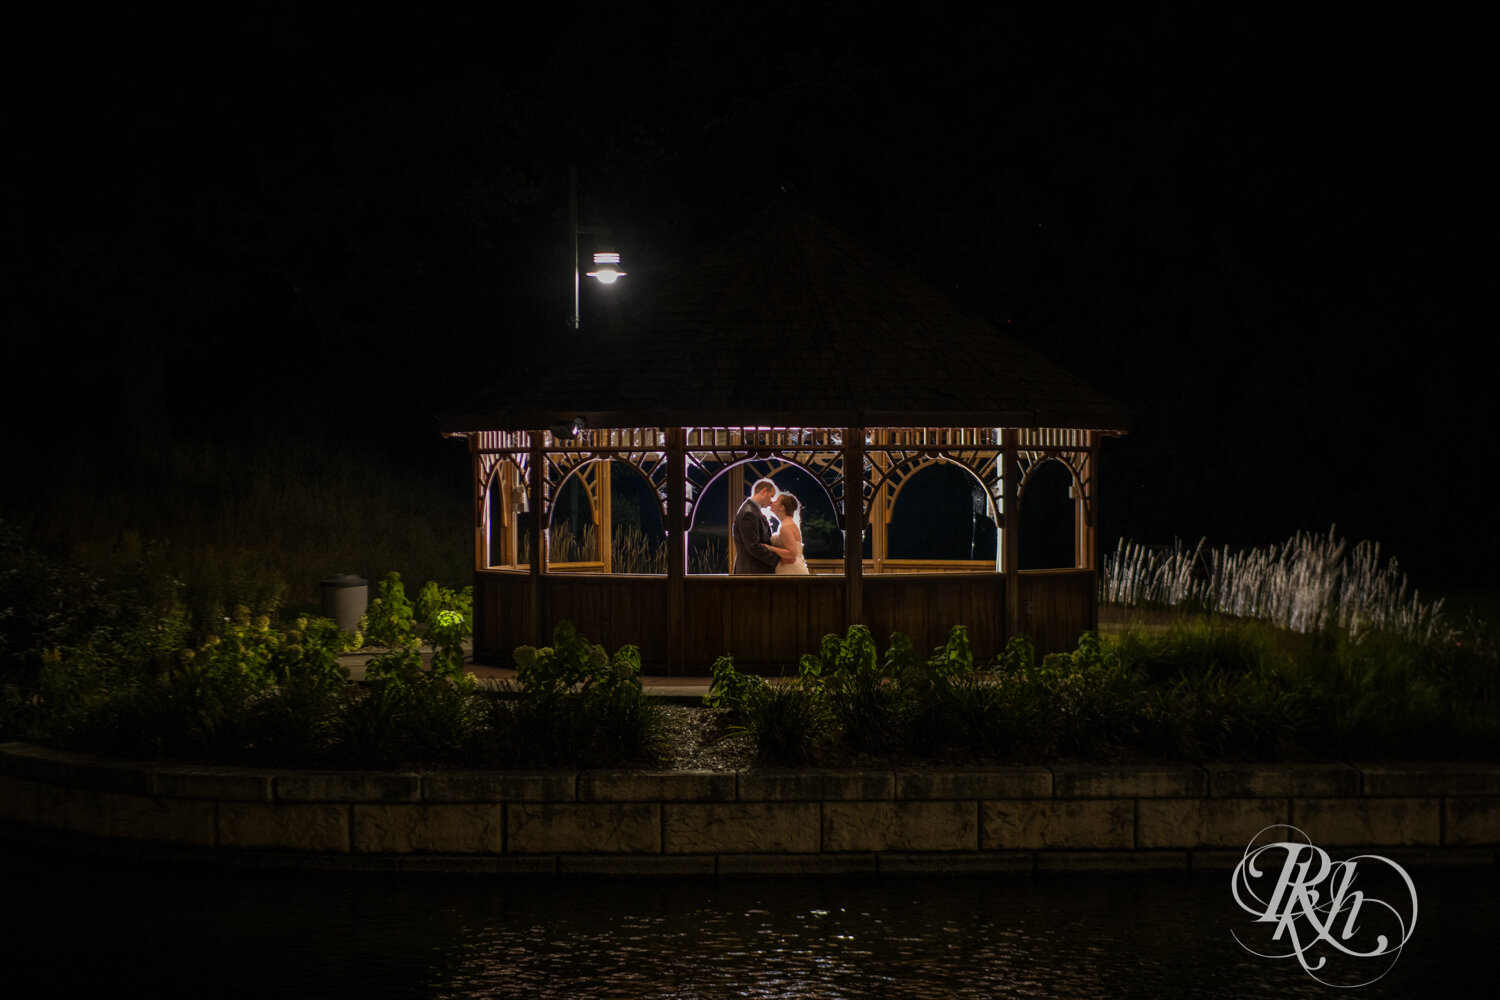 Bride and groom kiss in a gazebo at night at Eagan Community Center in Eagan, Minnesota.